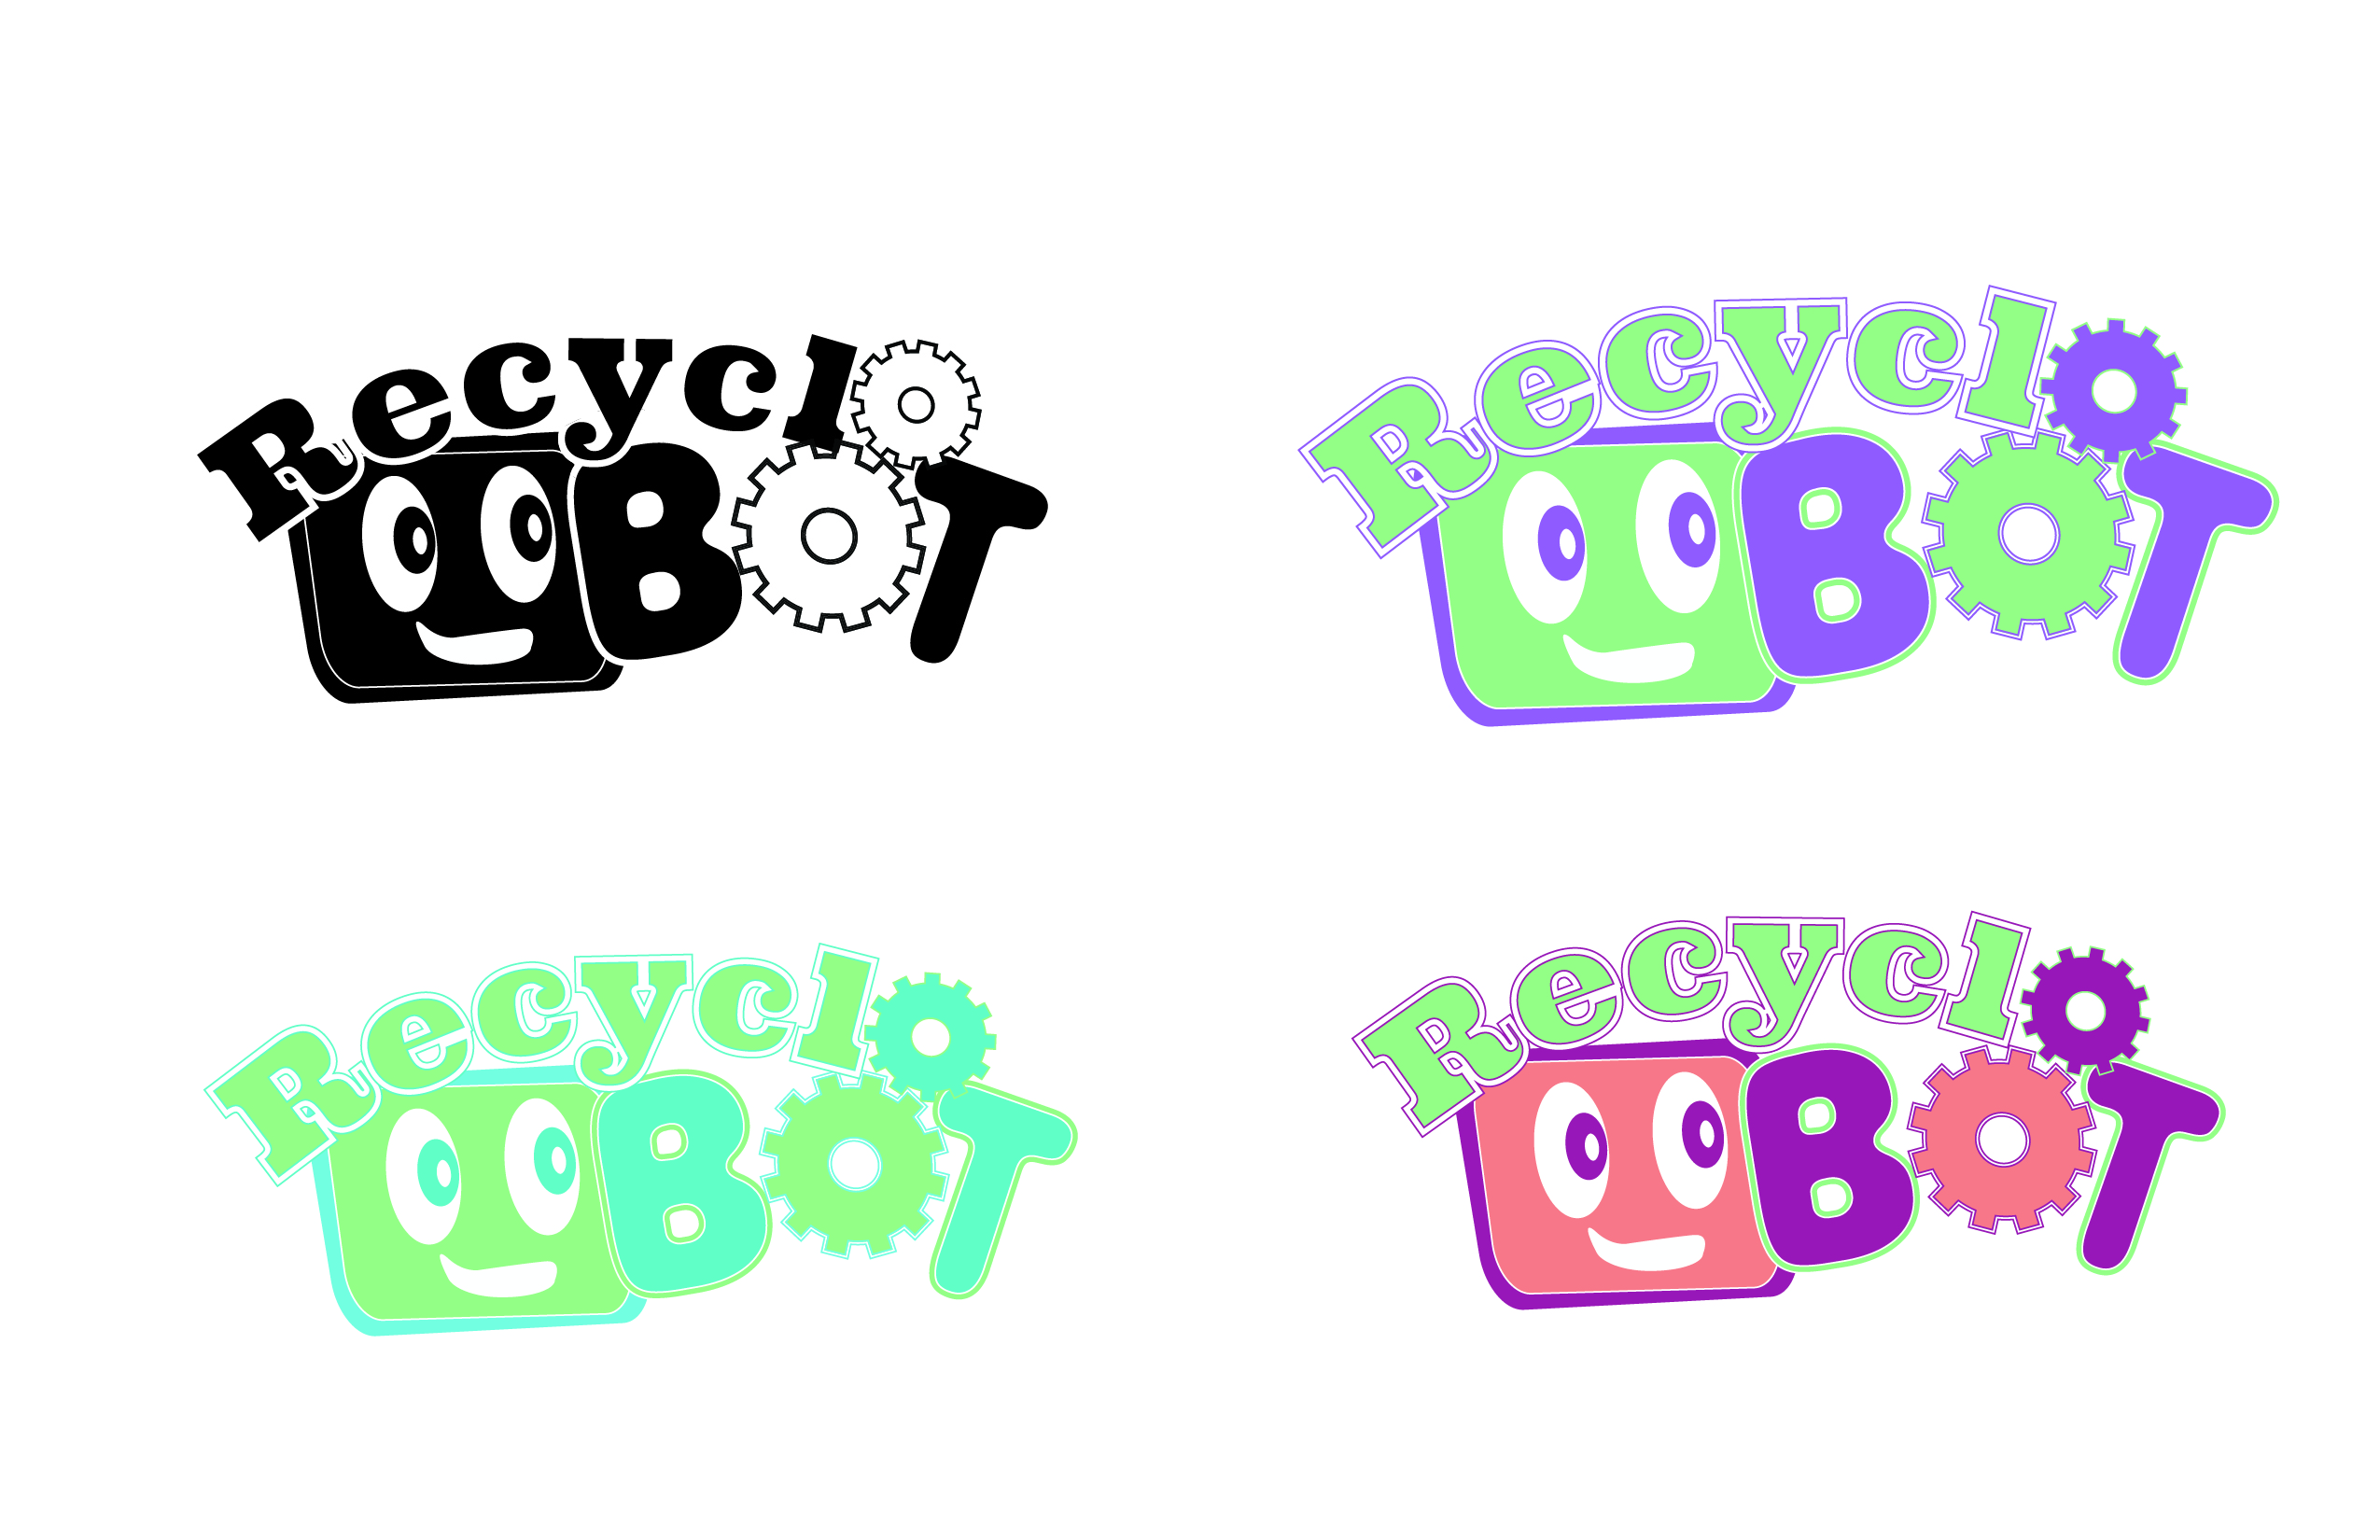 Recyclobot logo in process examples